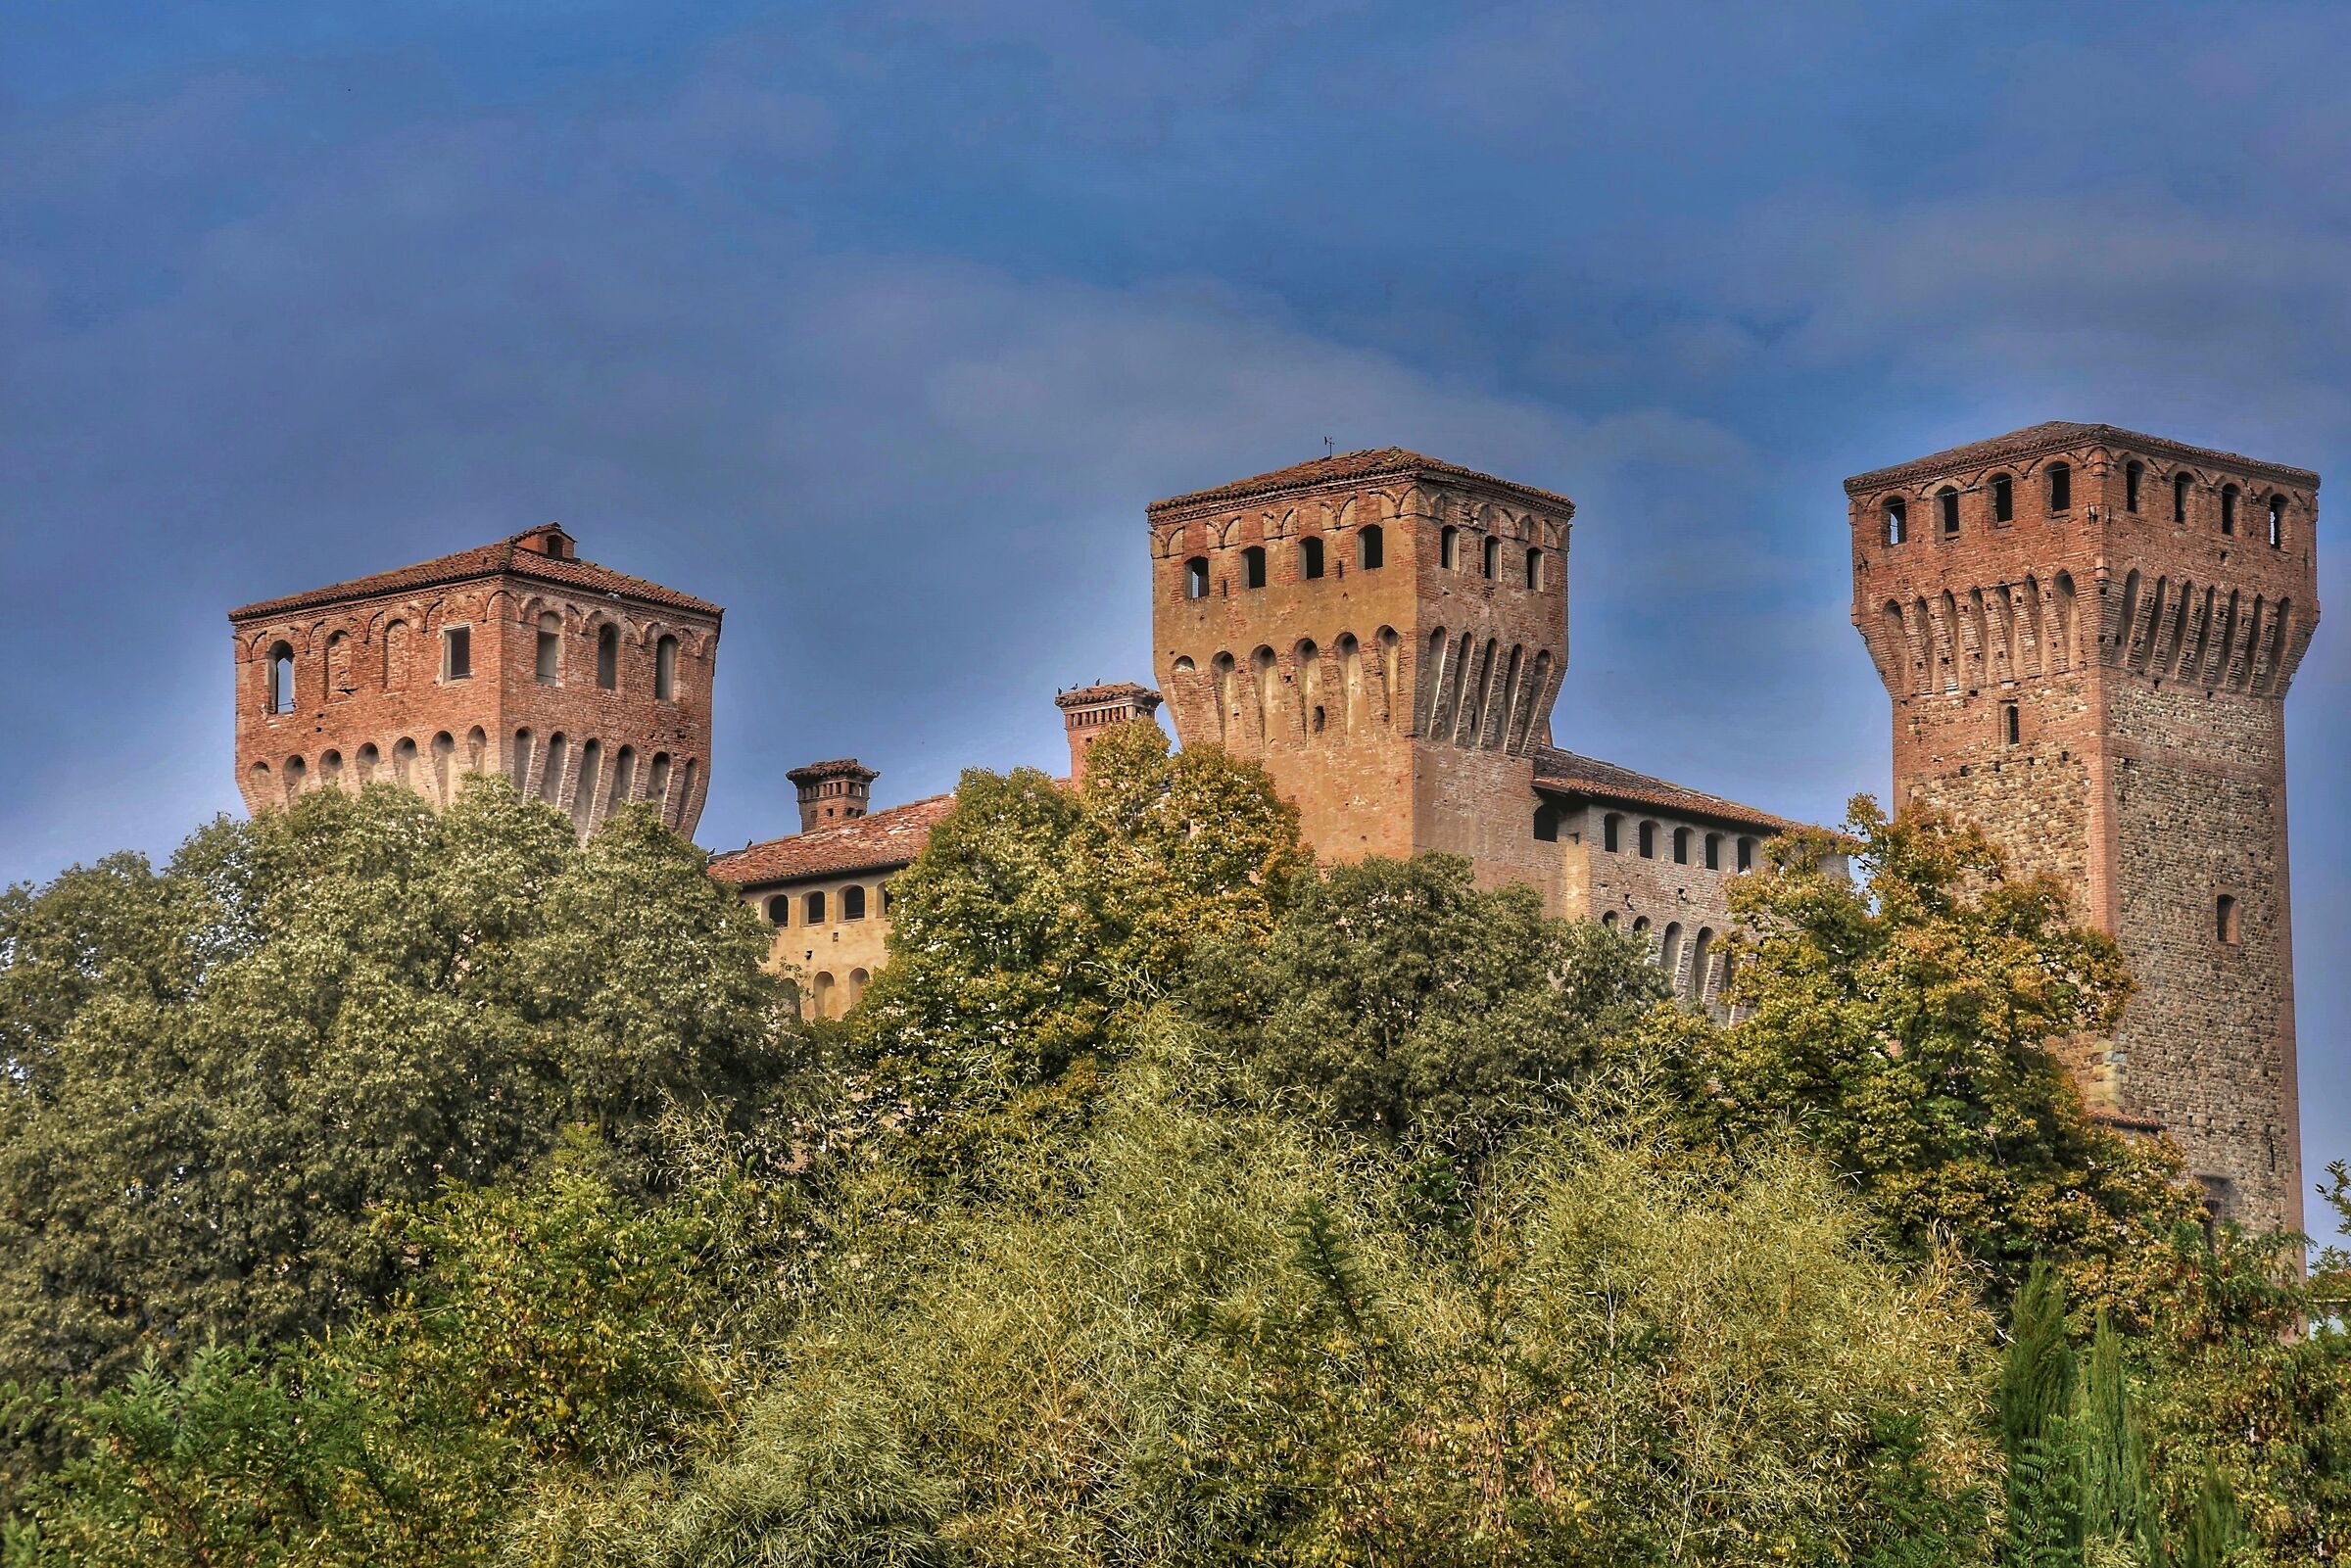  fortress of Vignola...